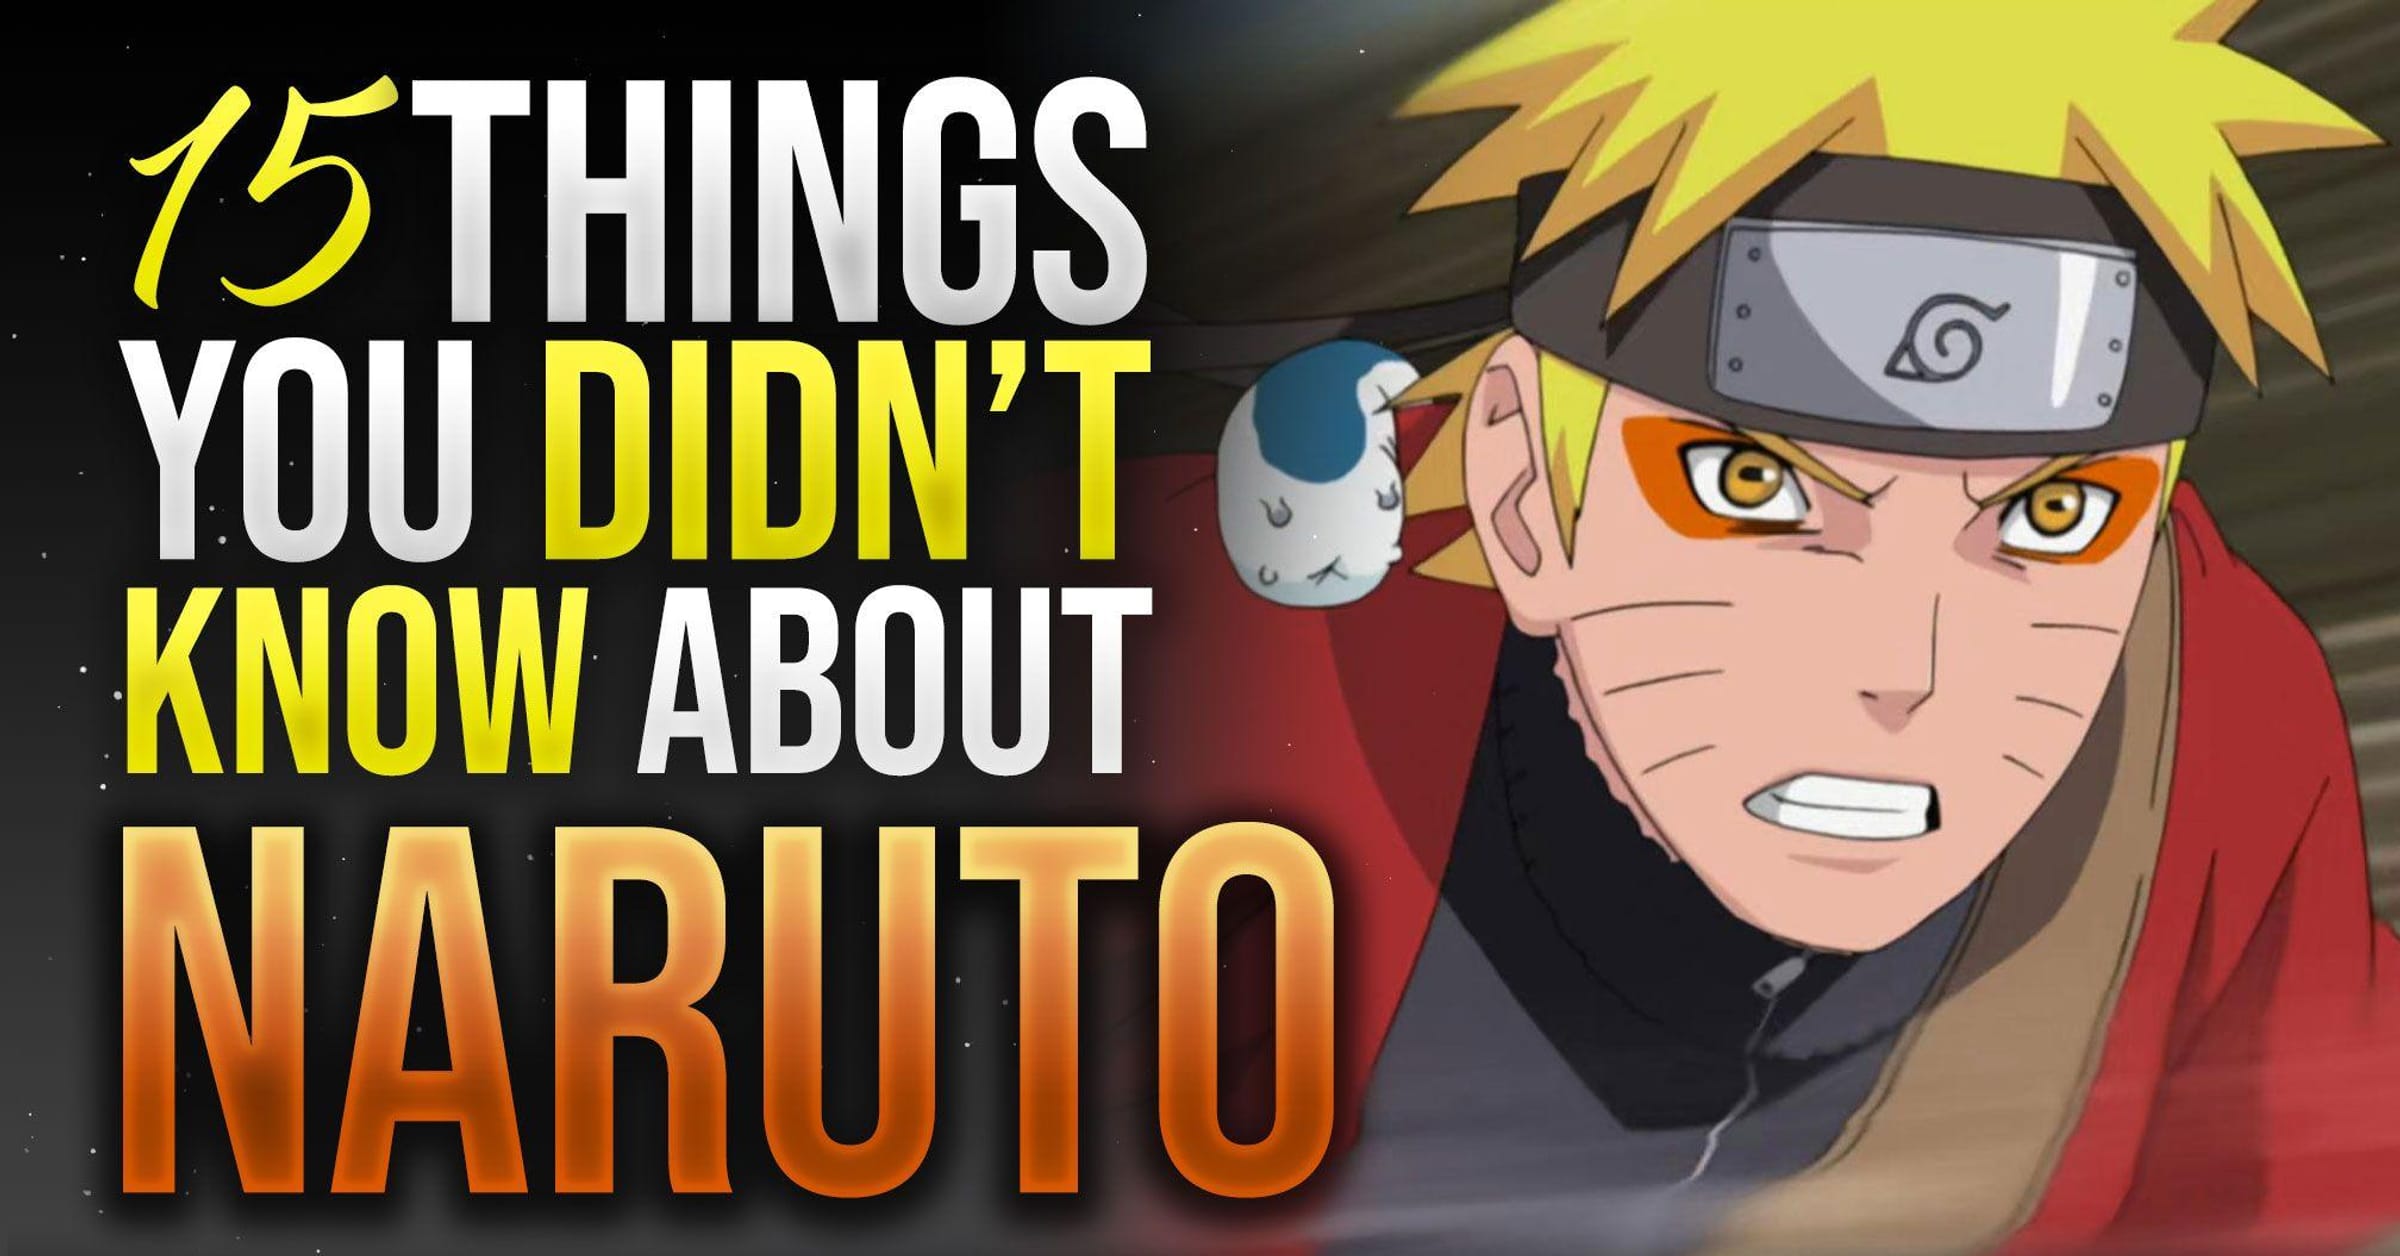 10 Ways Naruto Has Grown Since Becoming Hokage